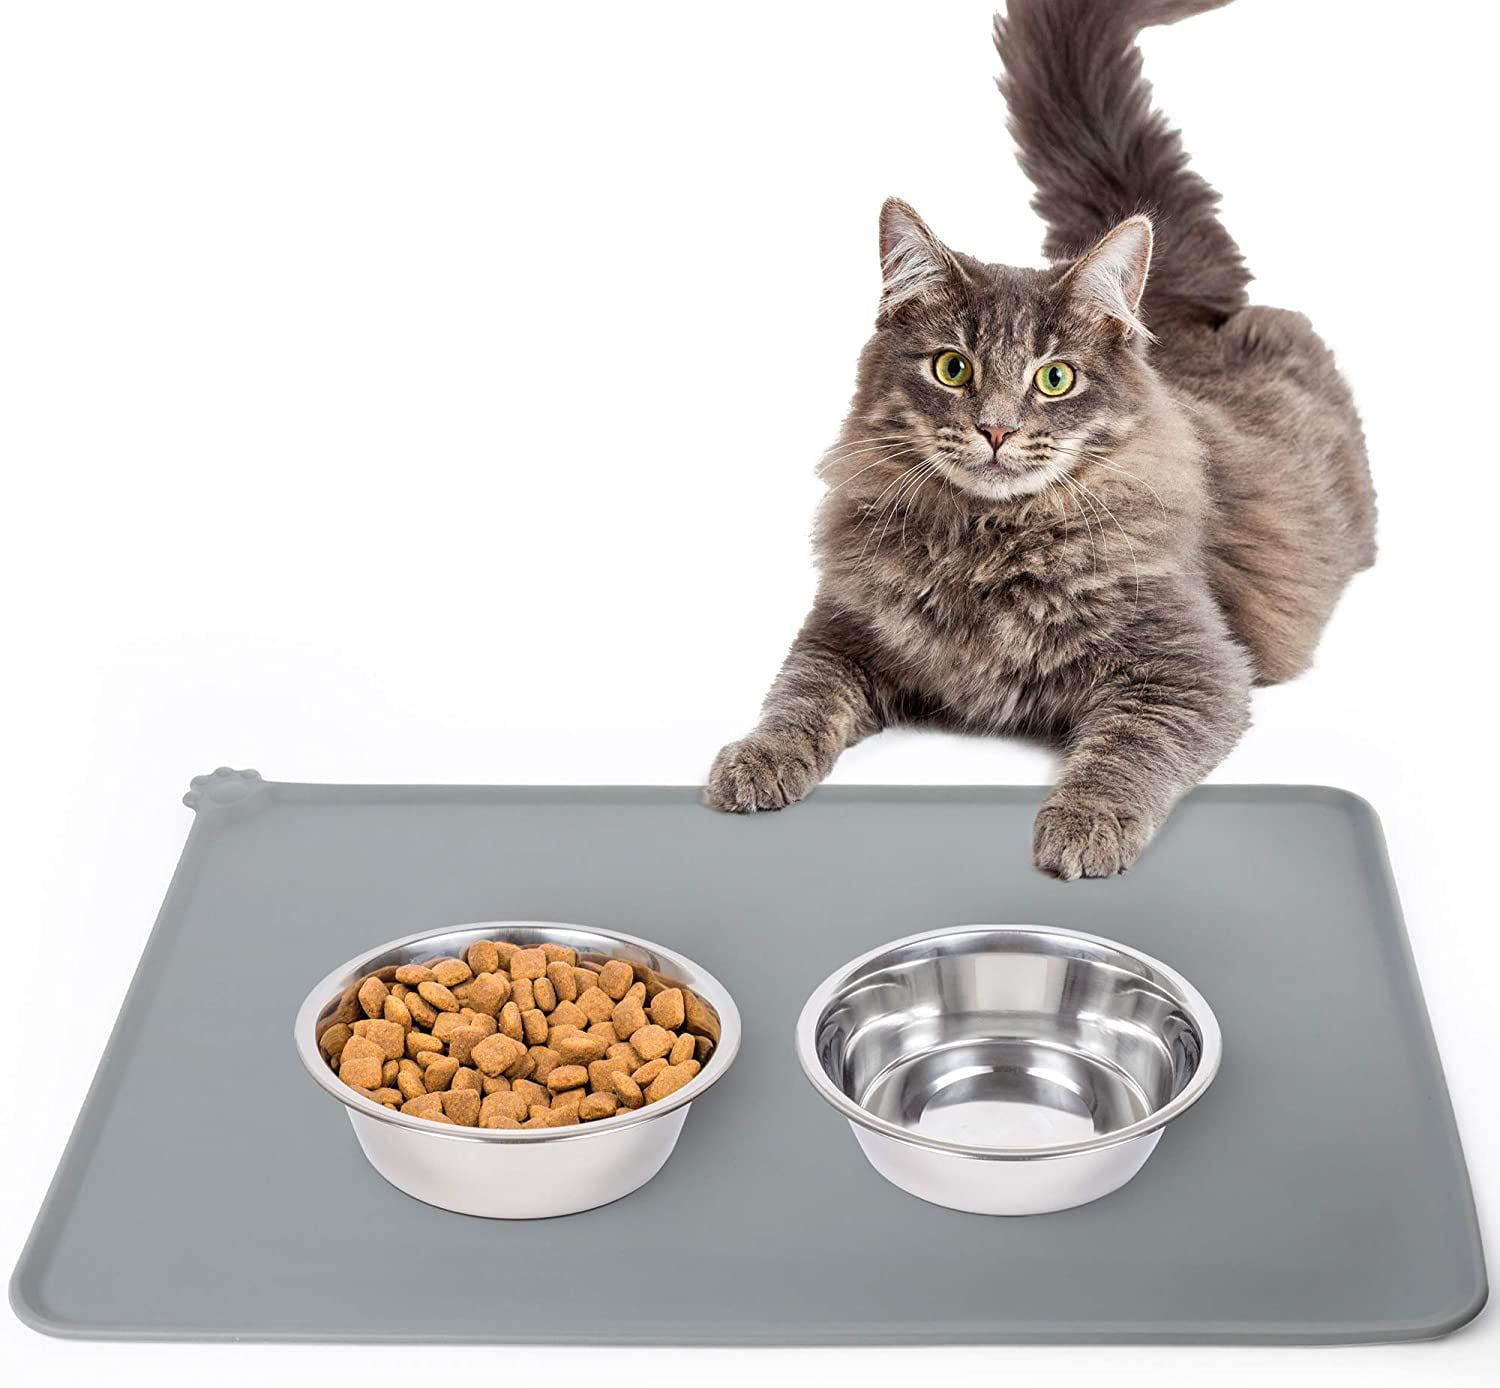 Rubber Nonslip Feeding Bowl Mat For Cat/Kitten Dog/Puppy Food/Water 